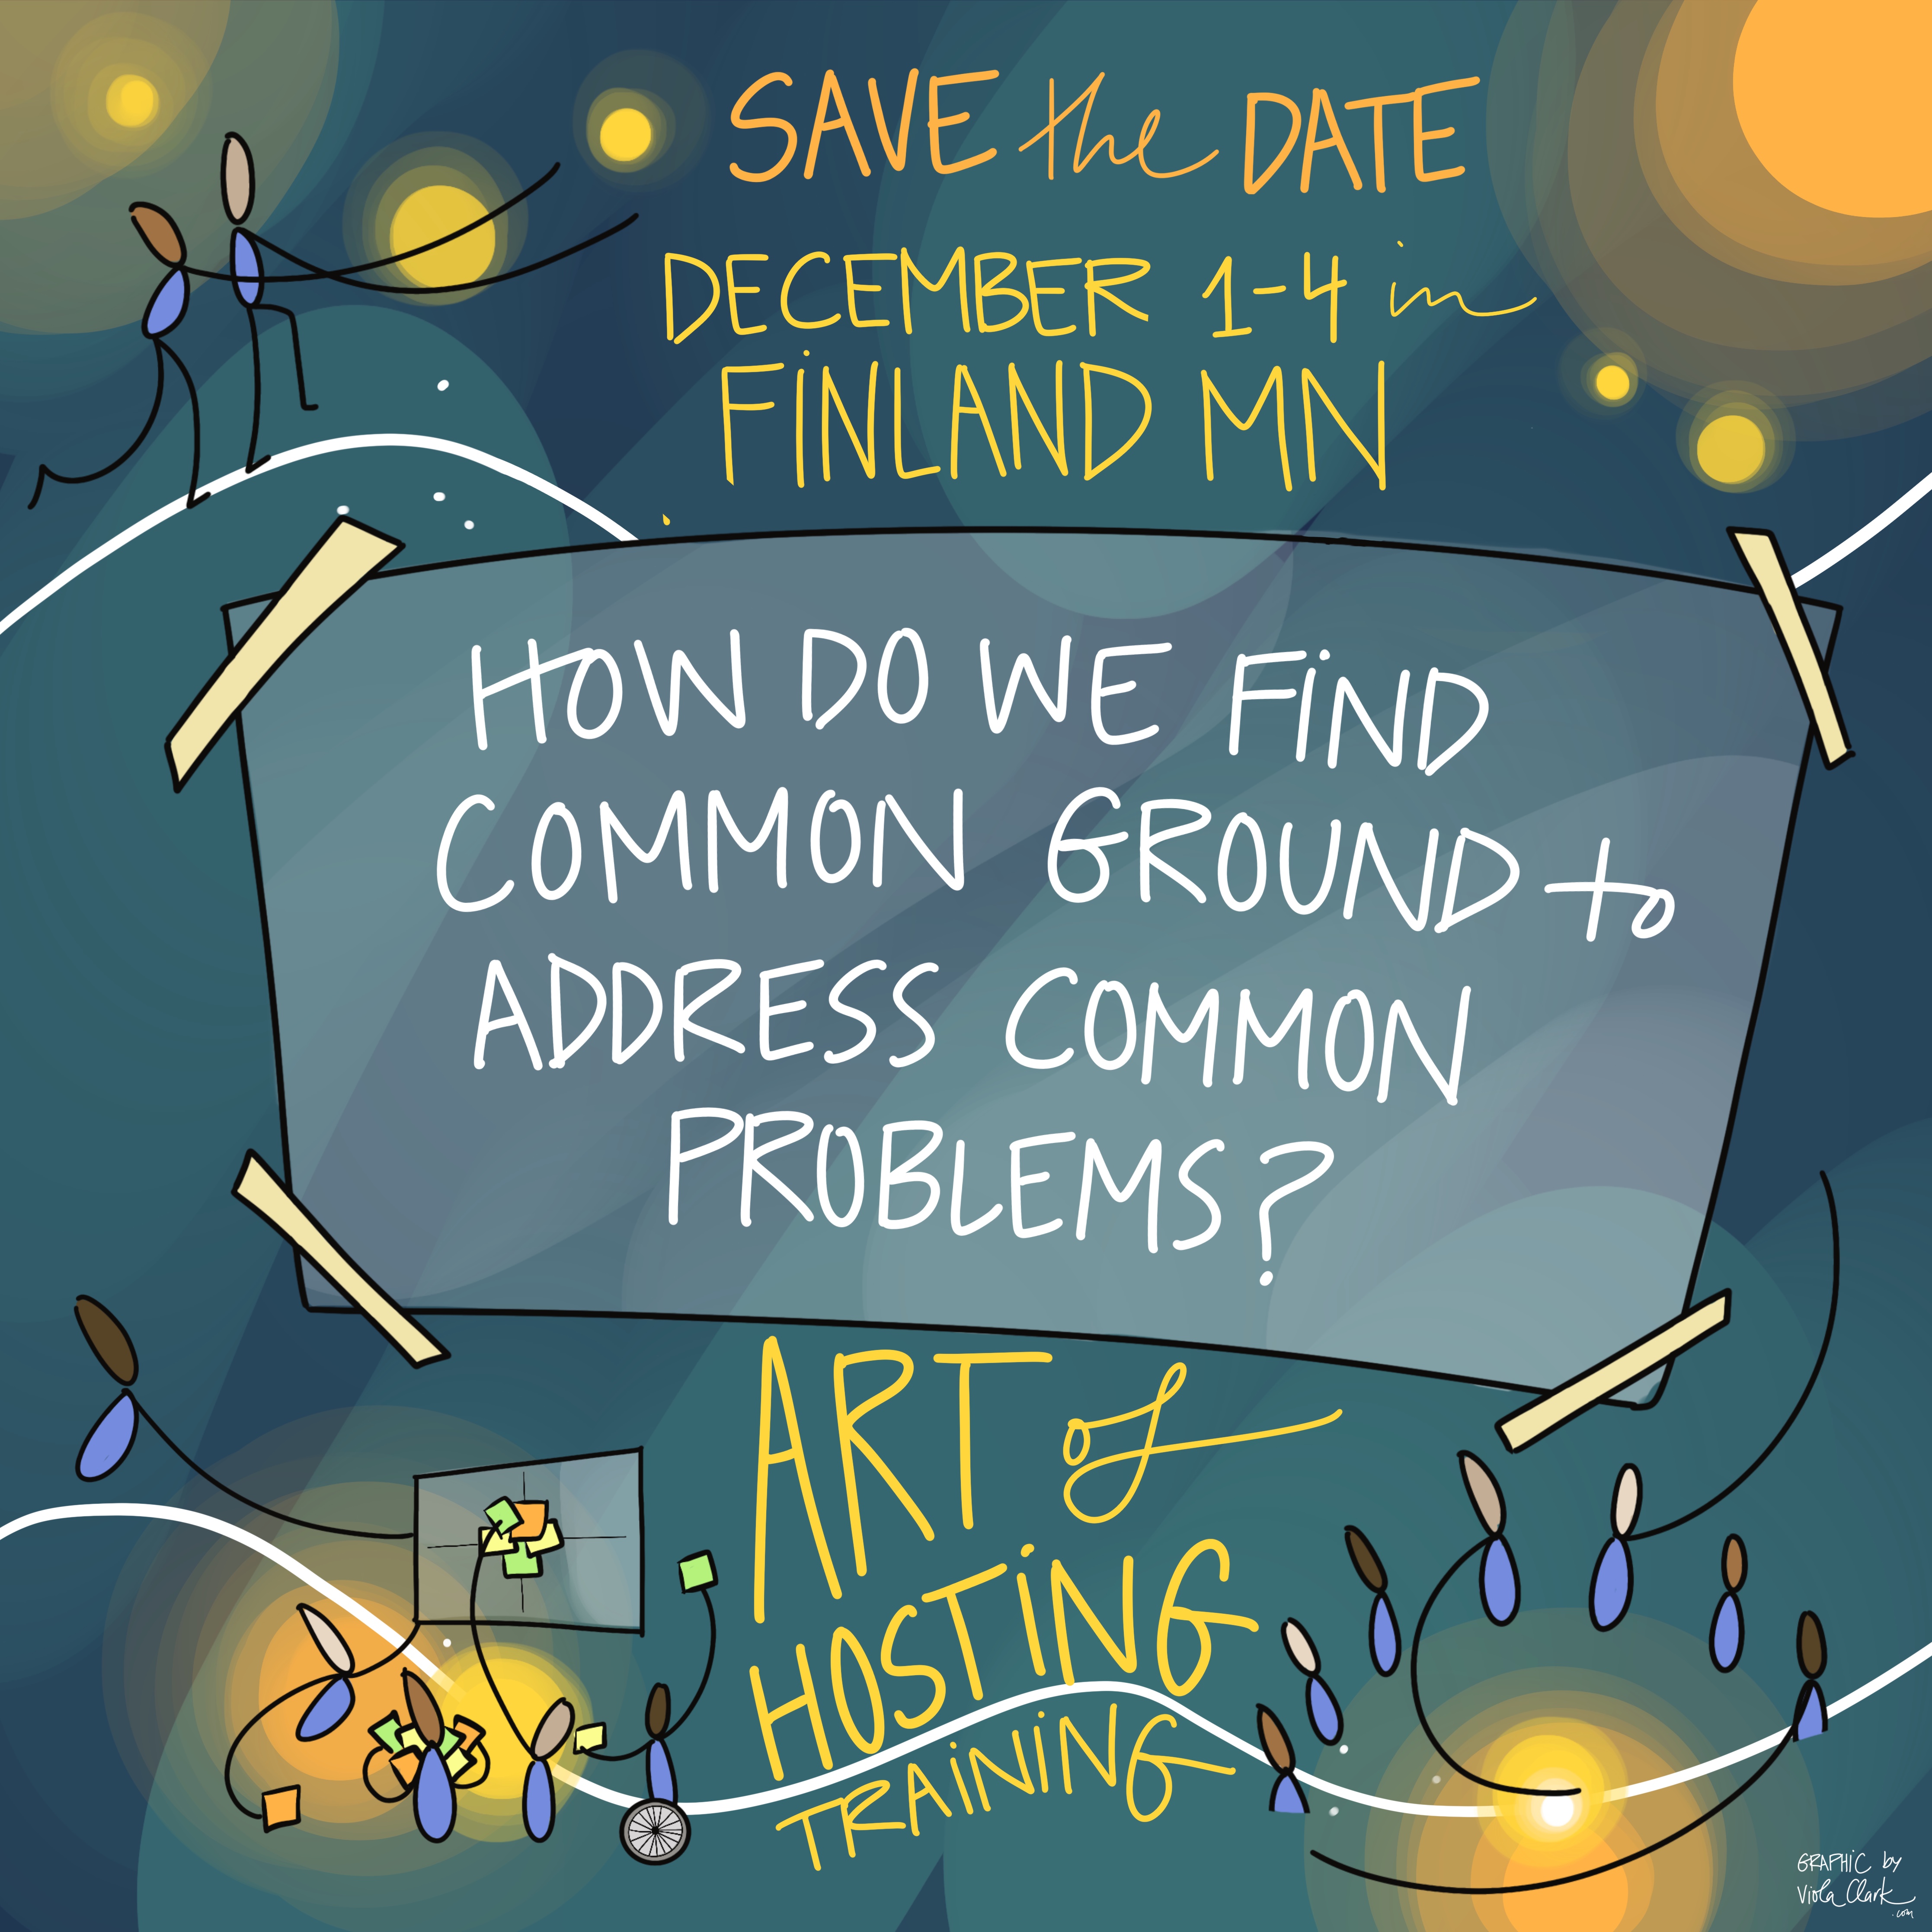 Art of Hosting Finland Minnesota